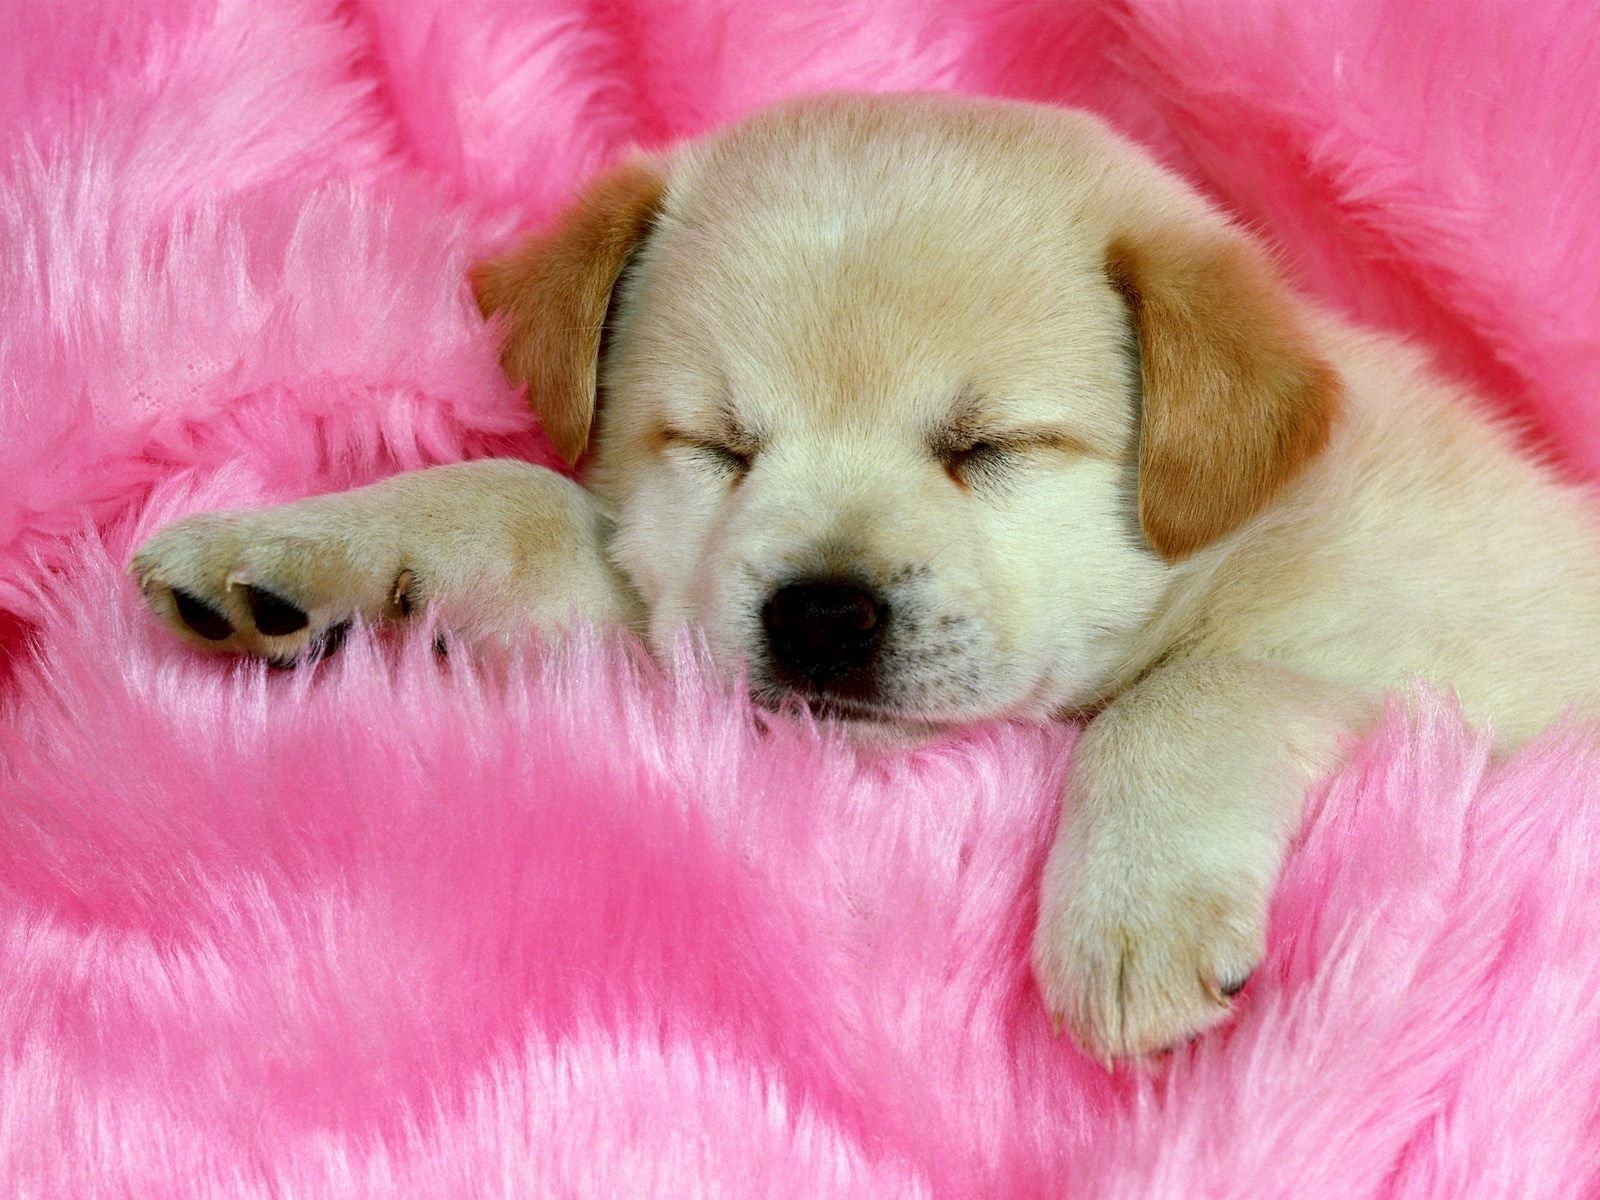 Cute Sleeping Dogs and Babies. Cute dog wallpaper, Sleeping puppies, Cute puppy wallpaper